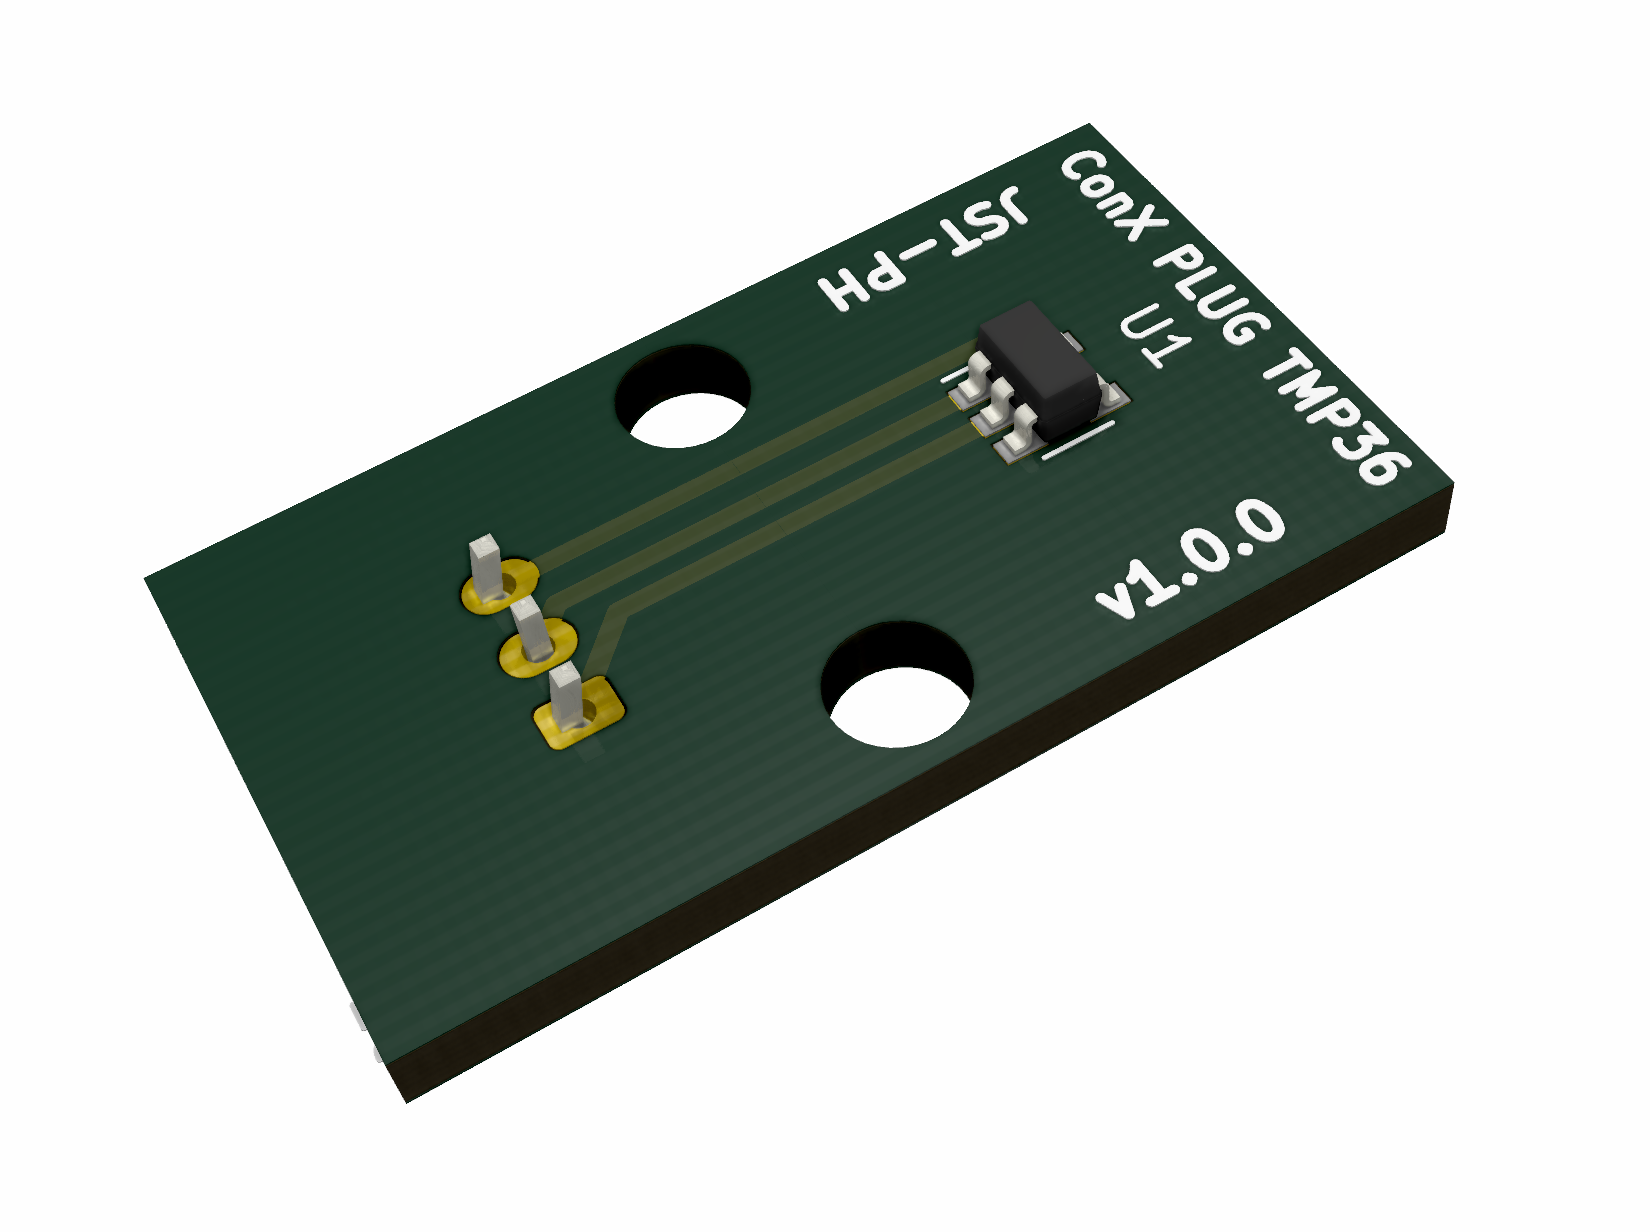 Temperatuur sensor analoog TMP36 SMD PCB ConX PLUG module JST-PH